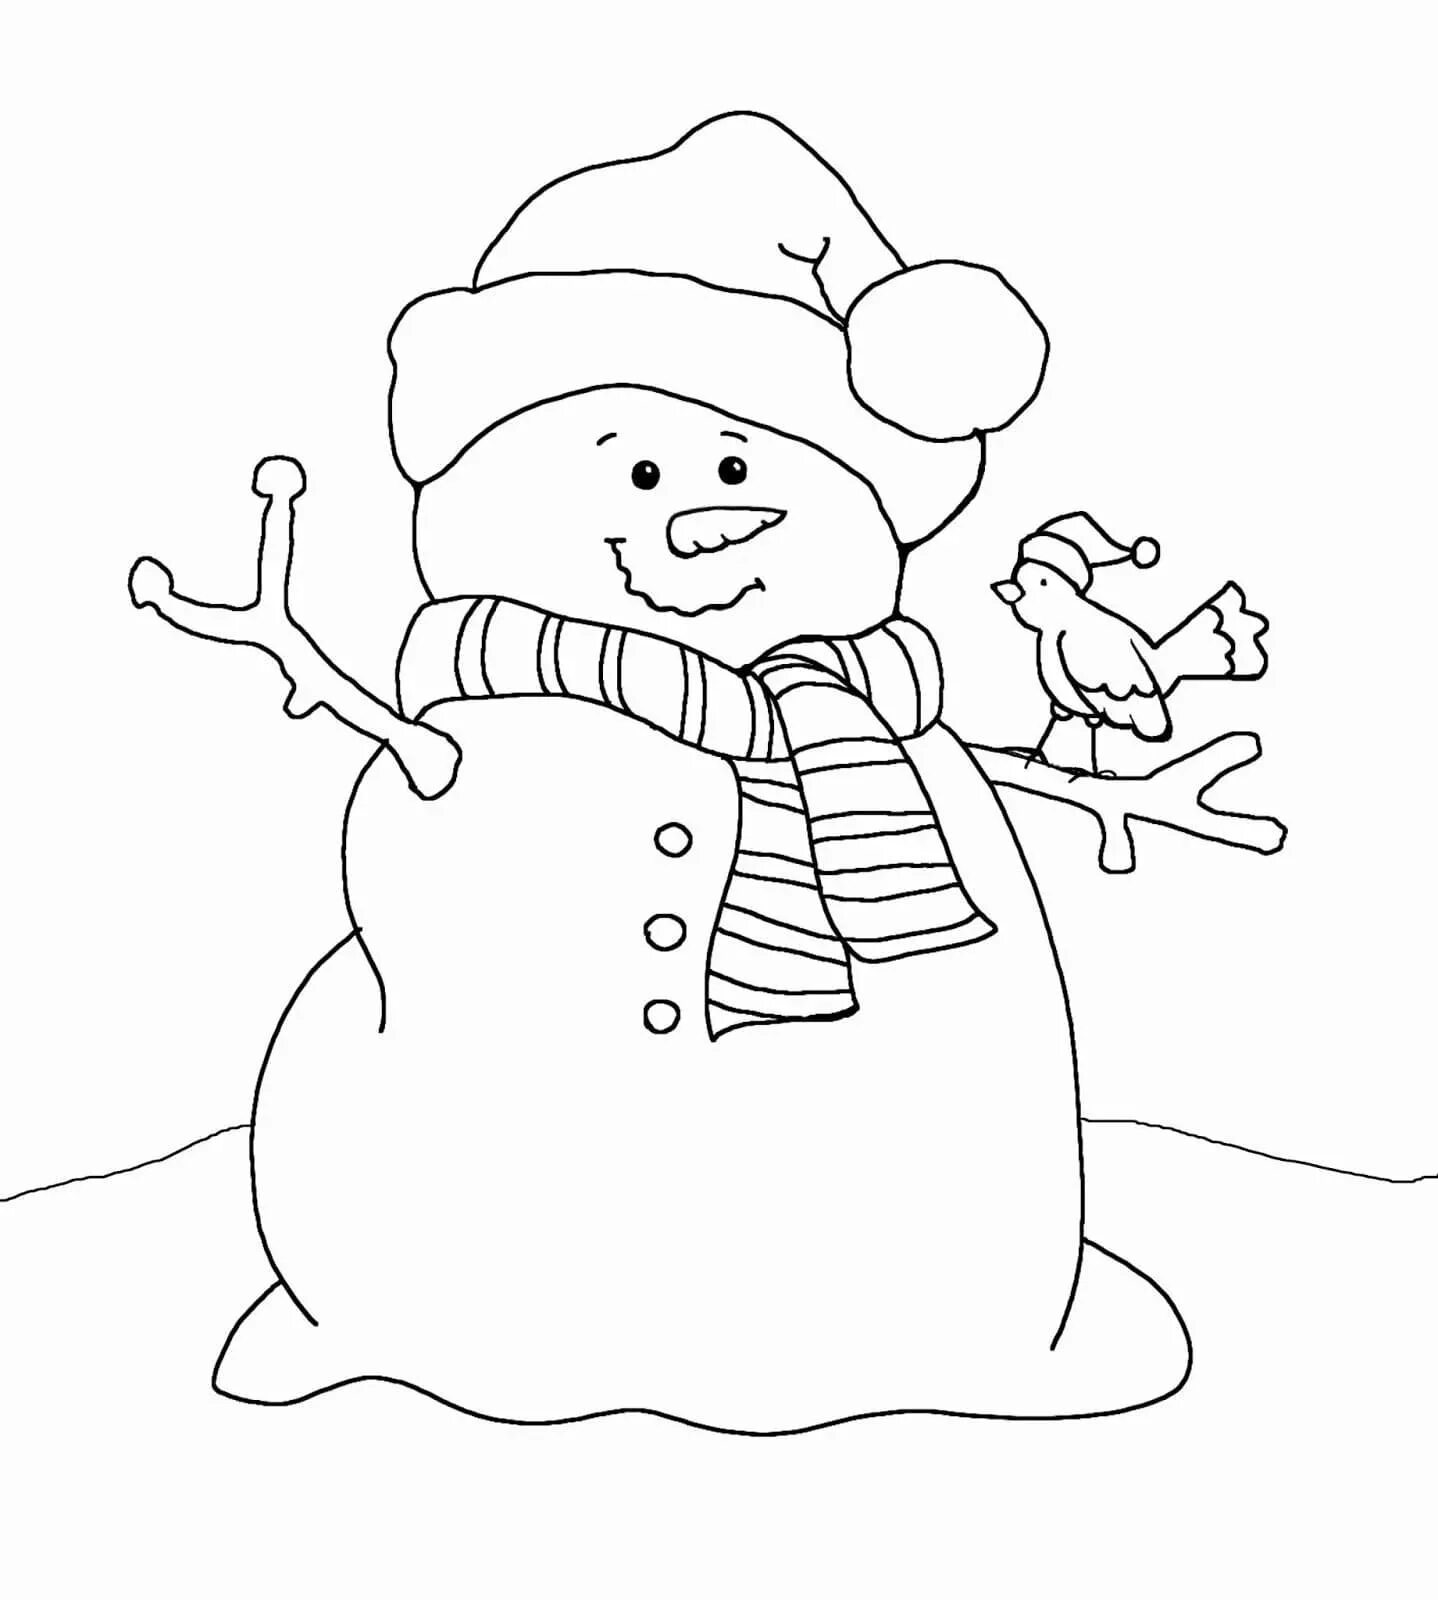 Раскраска сладкий новогодний снеговик